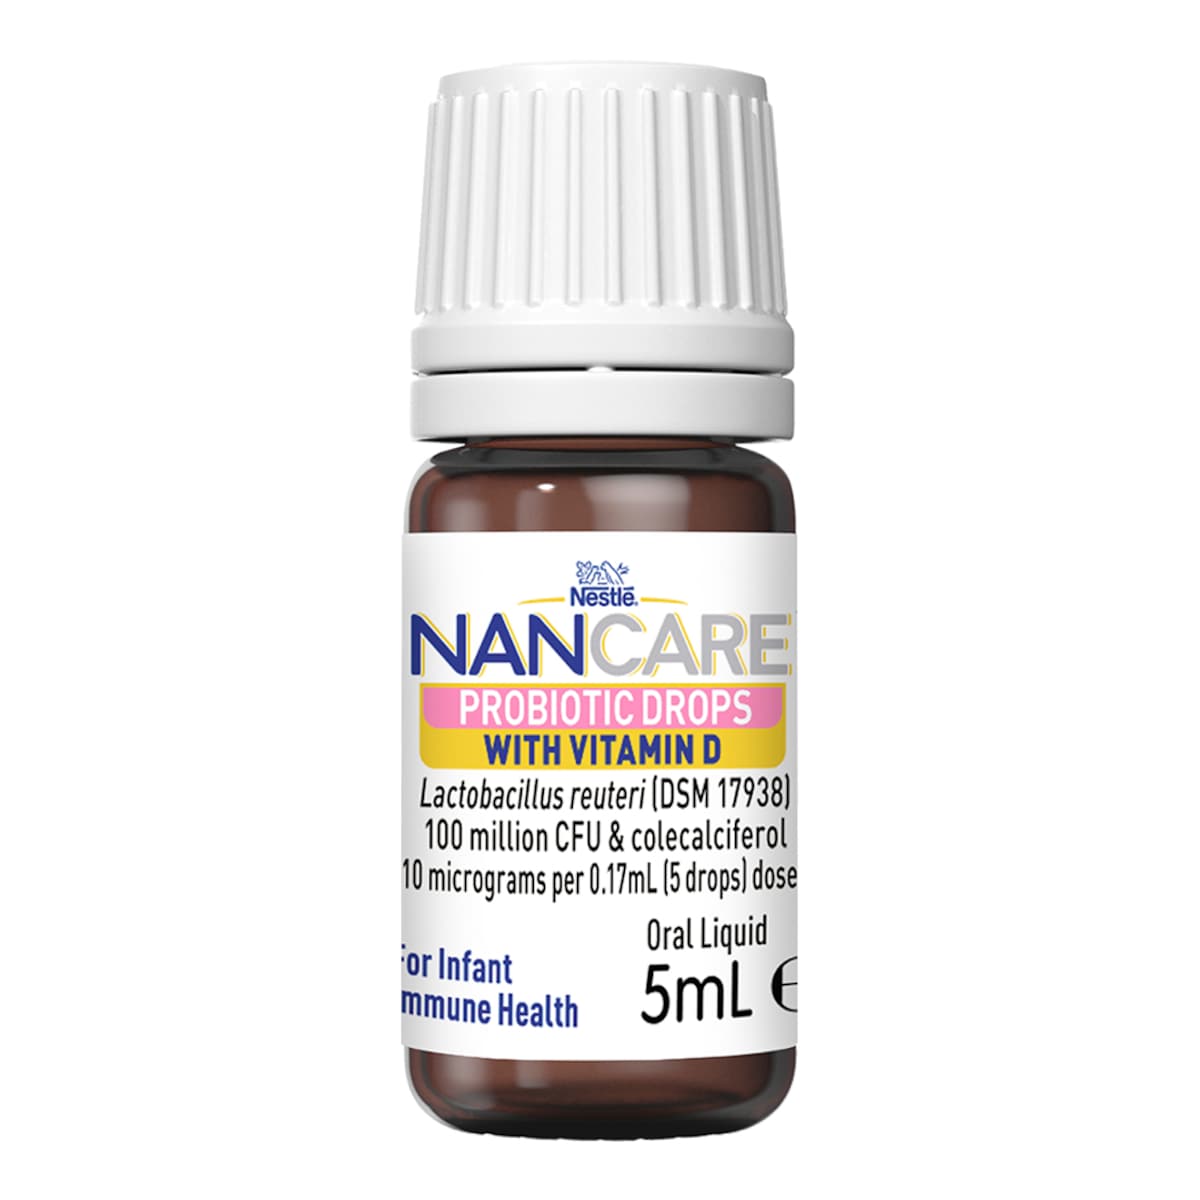 NAN CARE BioGaia Probiotic Drops with Vitamin D for Infant Immune Health 5ml